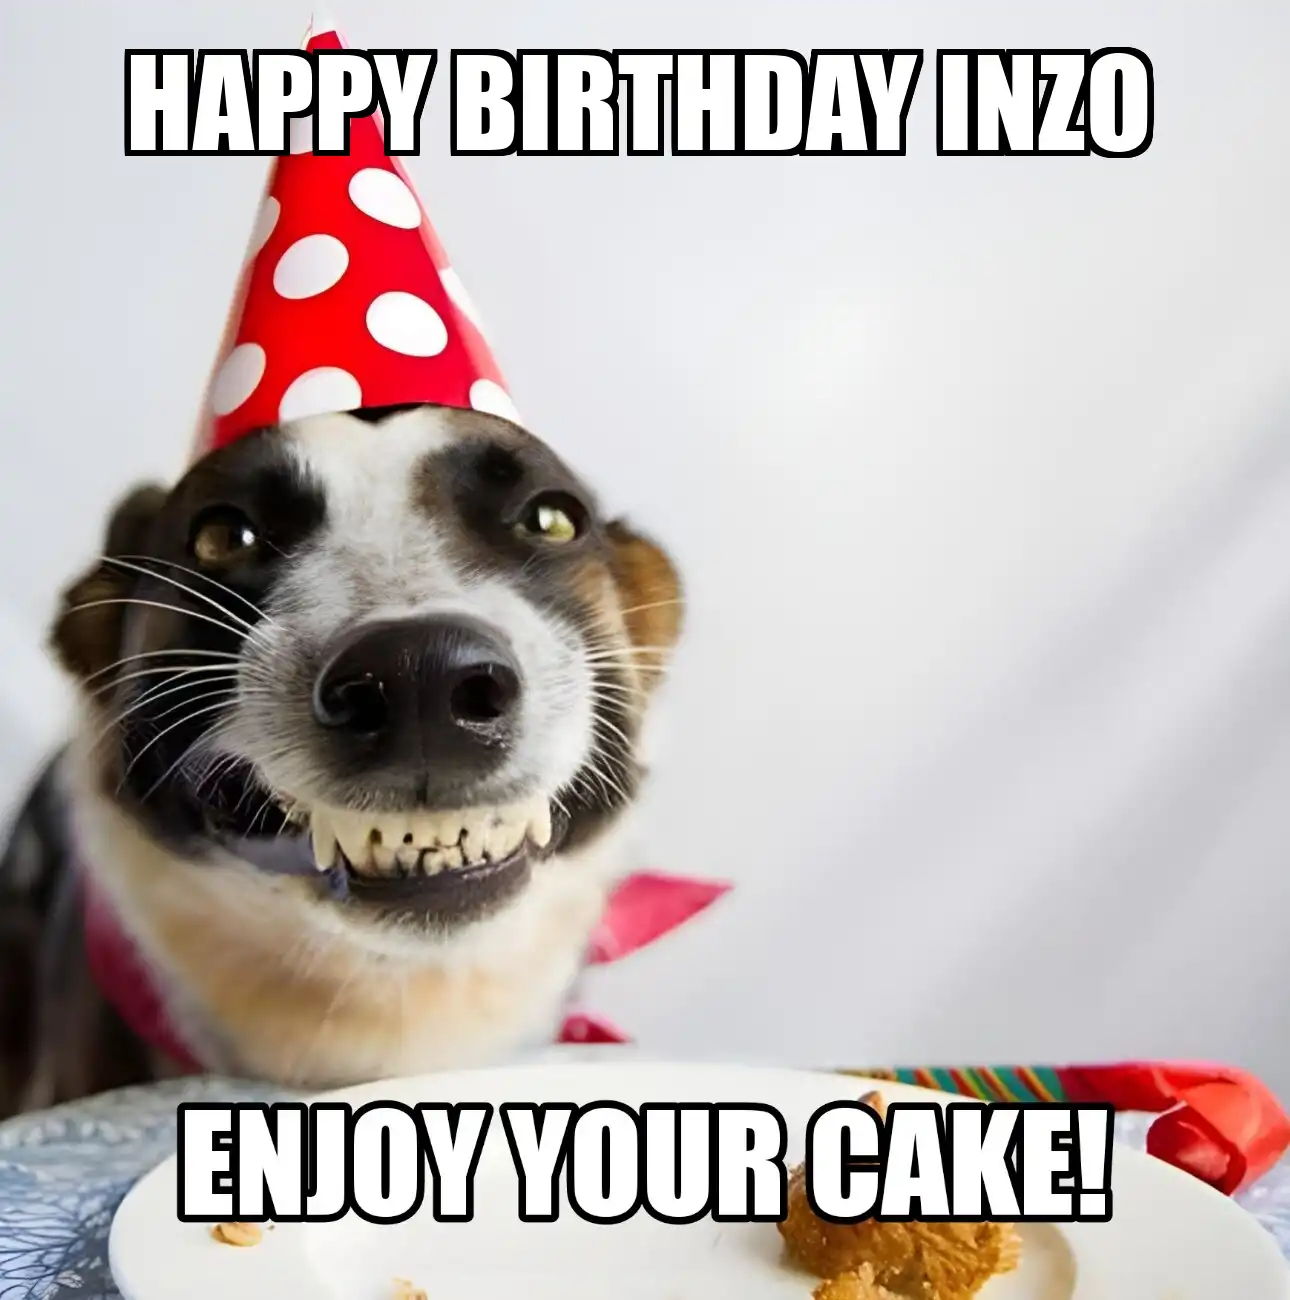 Happy Birthday Inzo Enjoy Your Cake Dog Meme